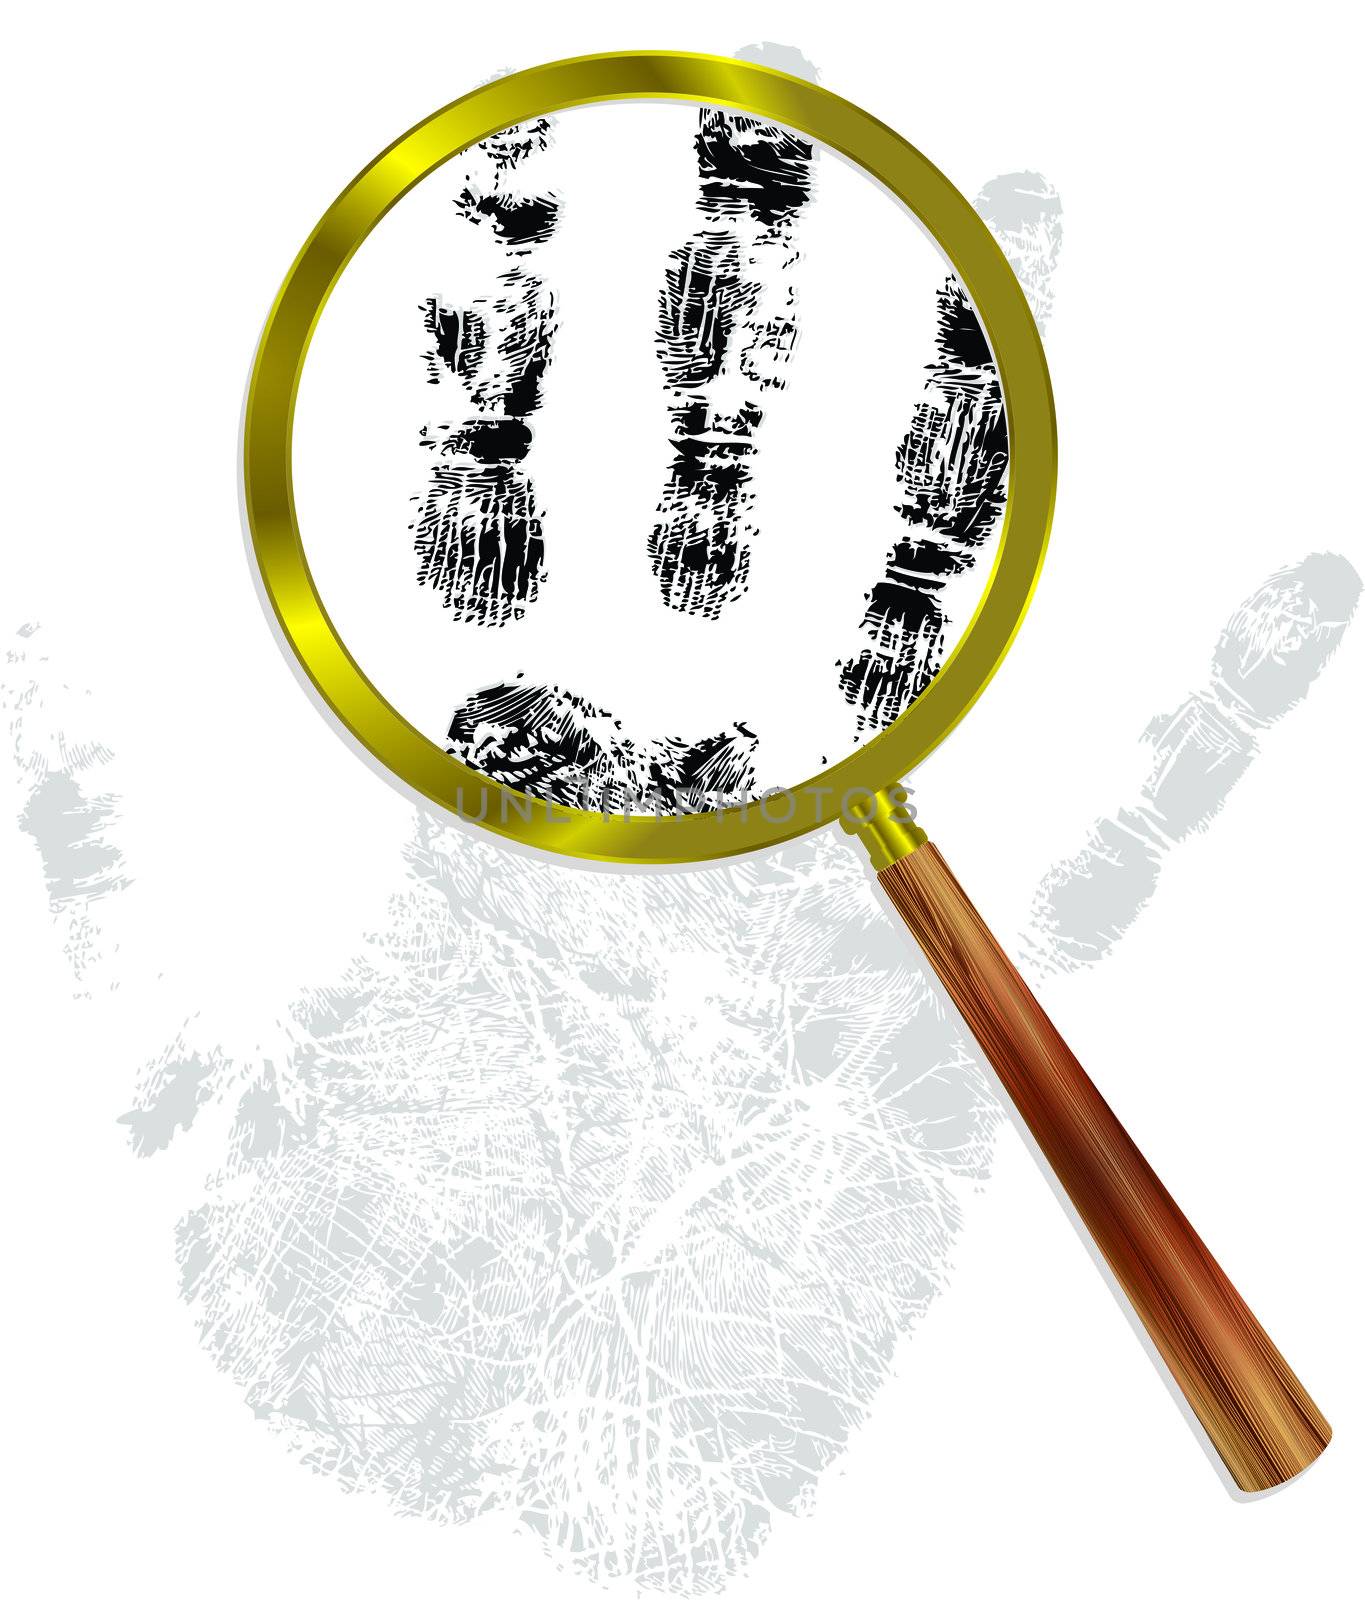 fingerprint through gold magnifying glass. detective concept